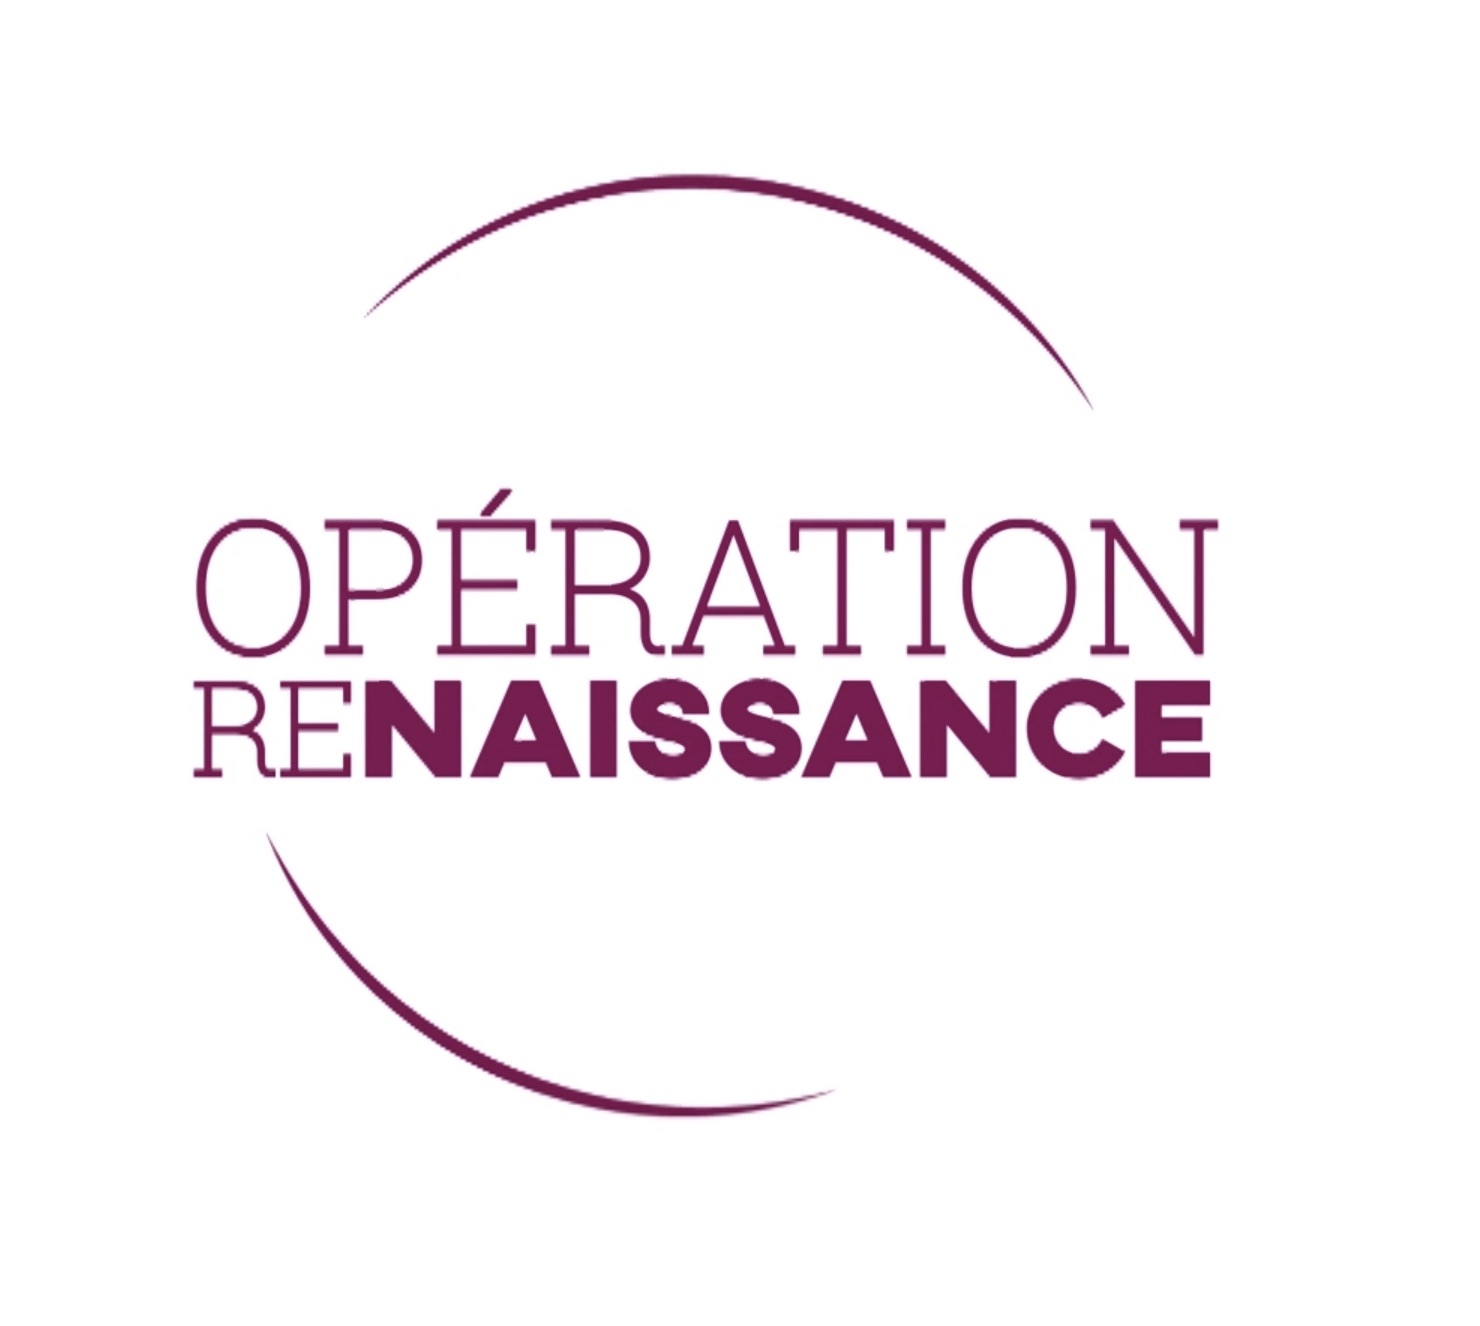 Opération renaissance - M6 - Karine Lemarchand -